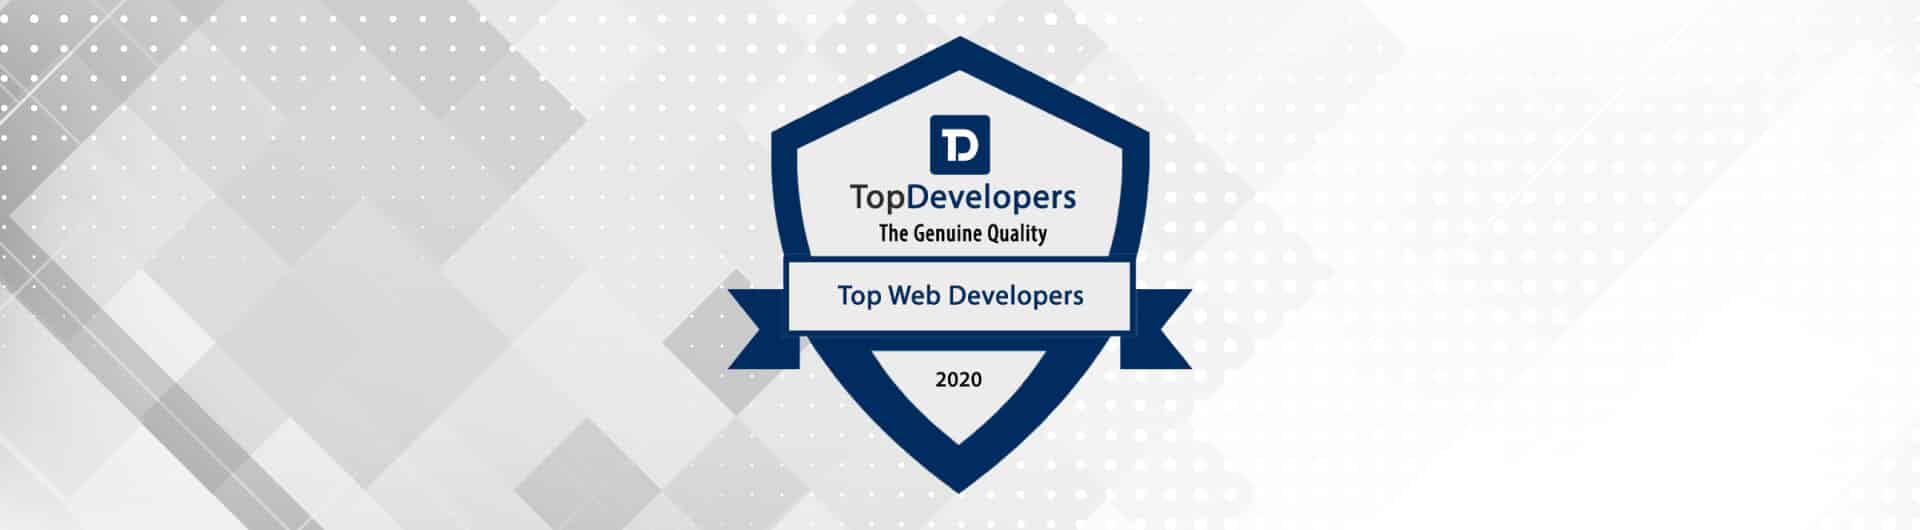 AROBS_HR_IMG_web_developers